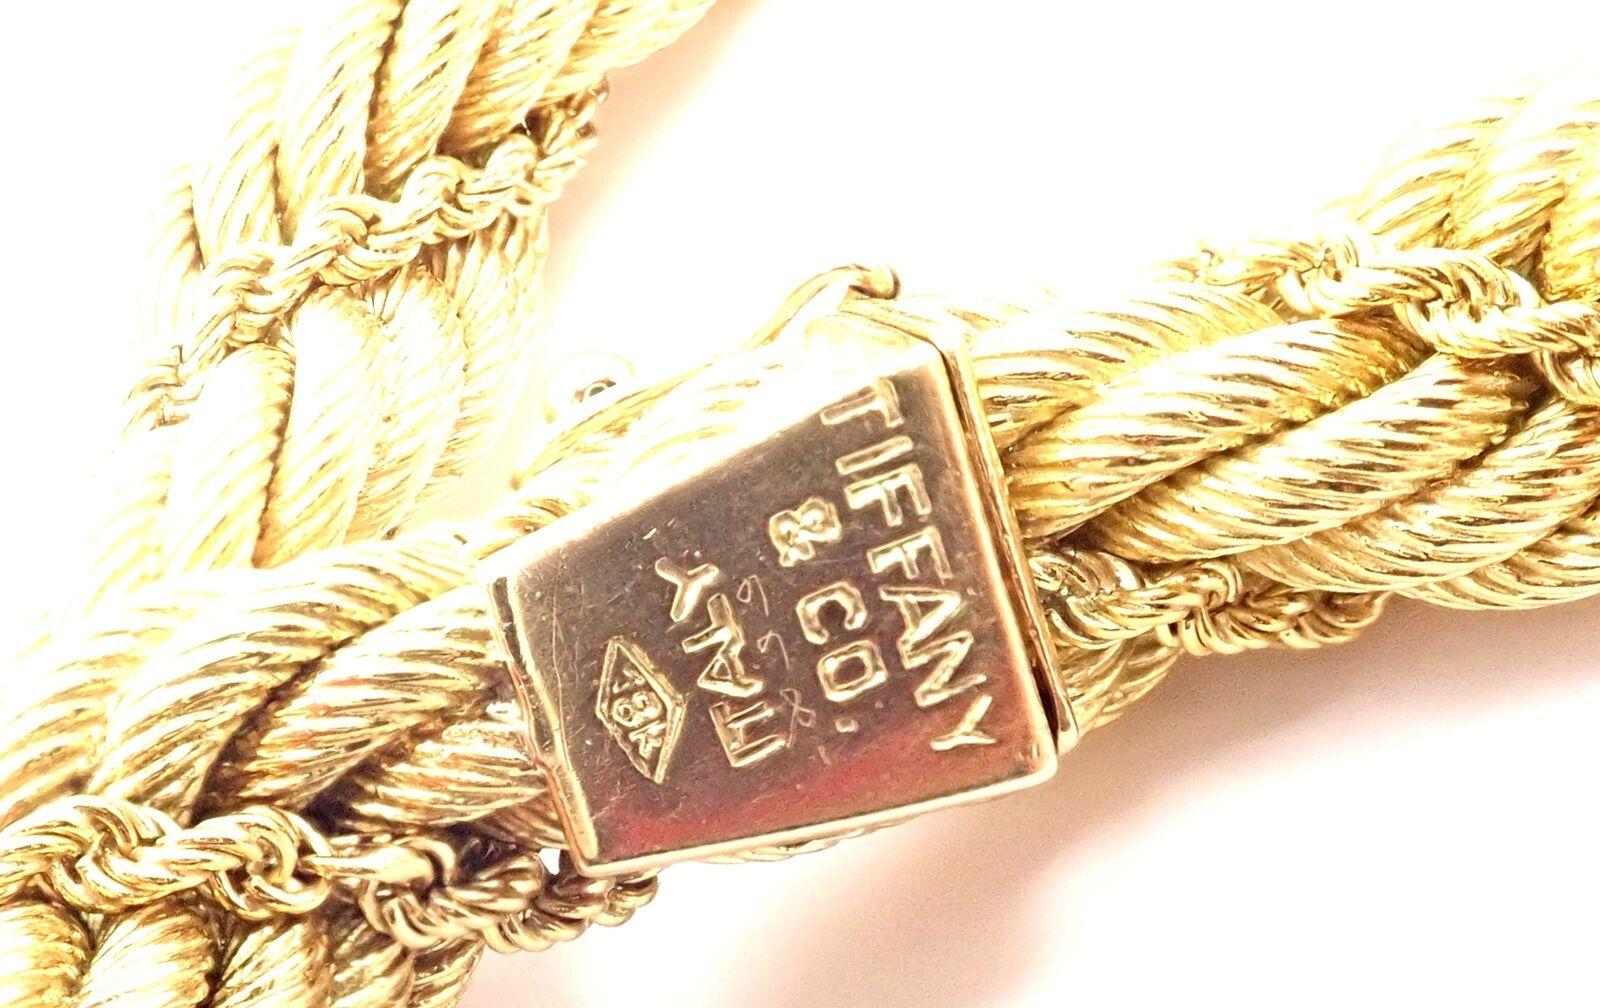 tiffany gold chain